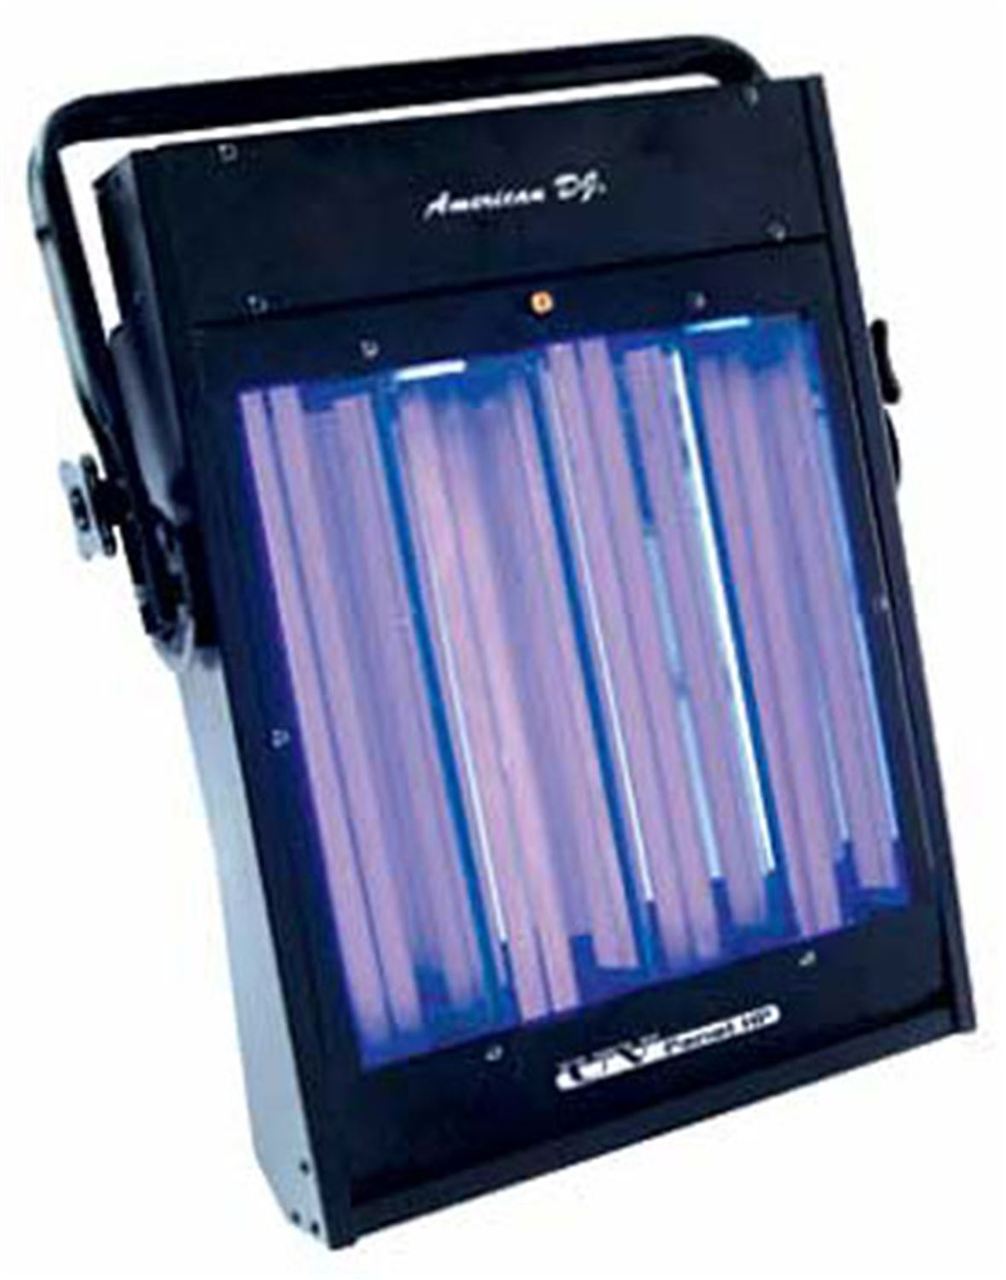 ADJ LILUVP40 Single 40W UV Blacklight Lamp